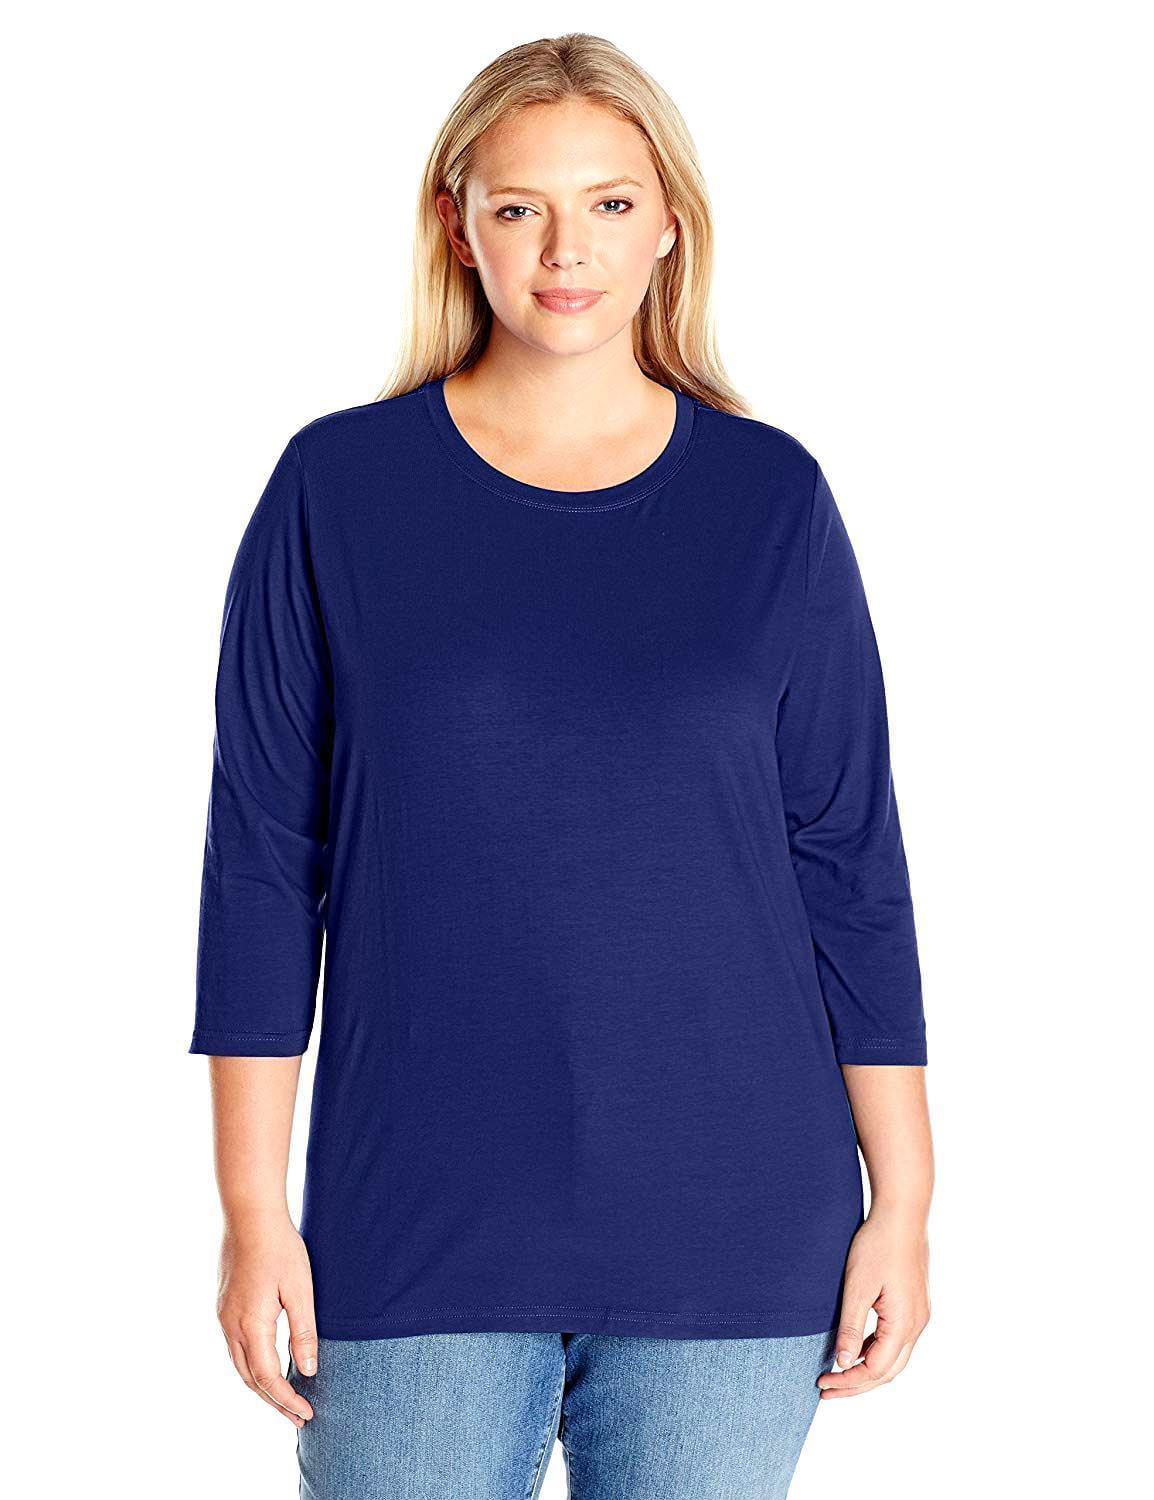 Lataw Women Tops and Sweatshirt Stylish Soft Plus Size Tops Print Round Neck Long Sleeved Long T-Shirt Leisure Sporty Blouse Tunic